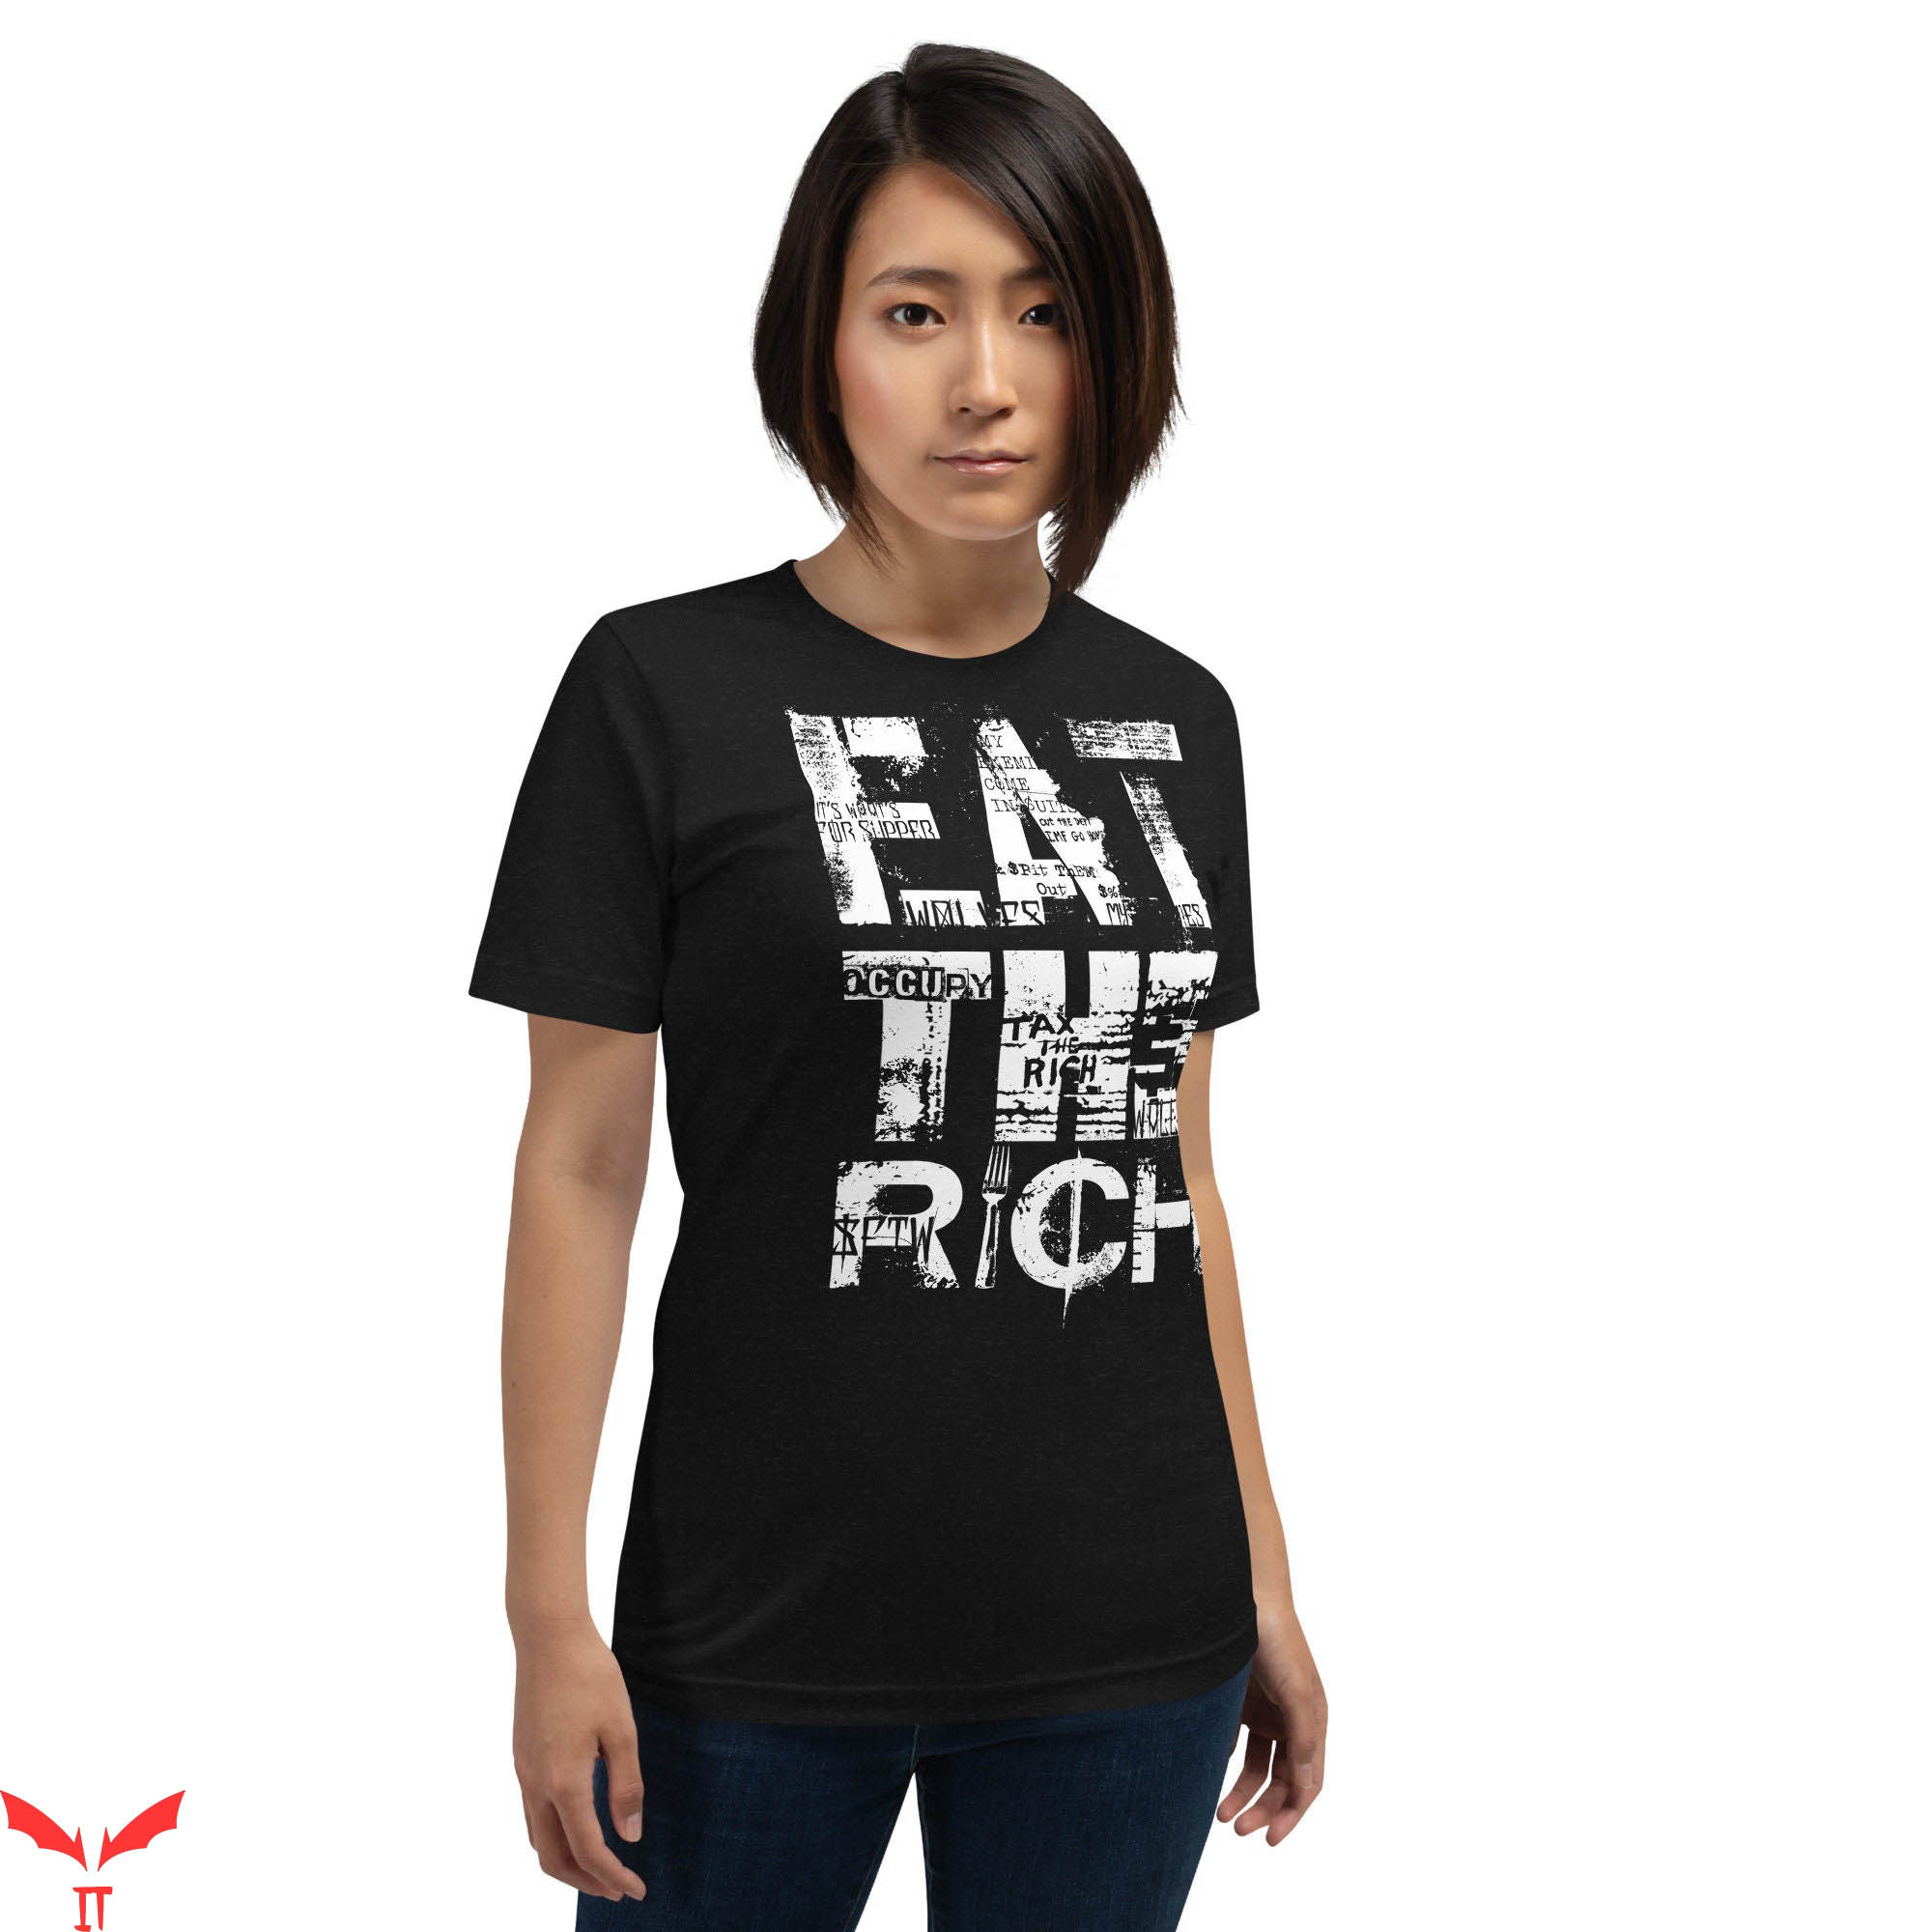 Eat The Rich T-Shirt Eat The Rich Shirt Anti Establishment